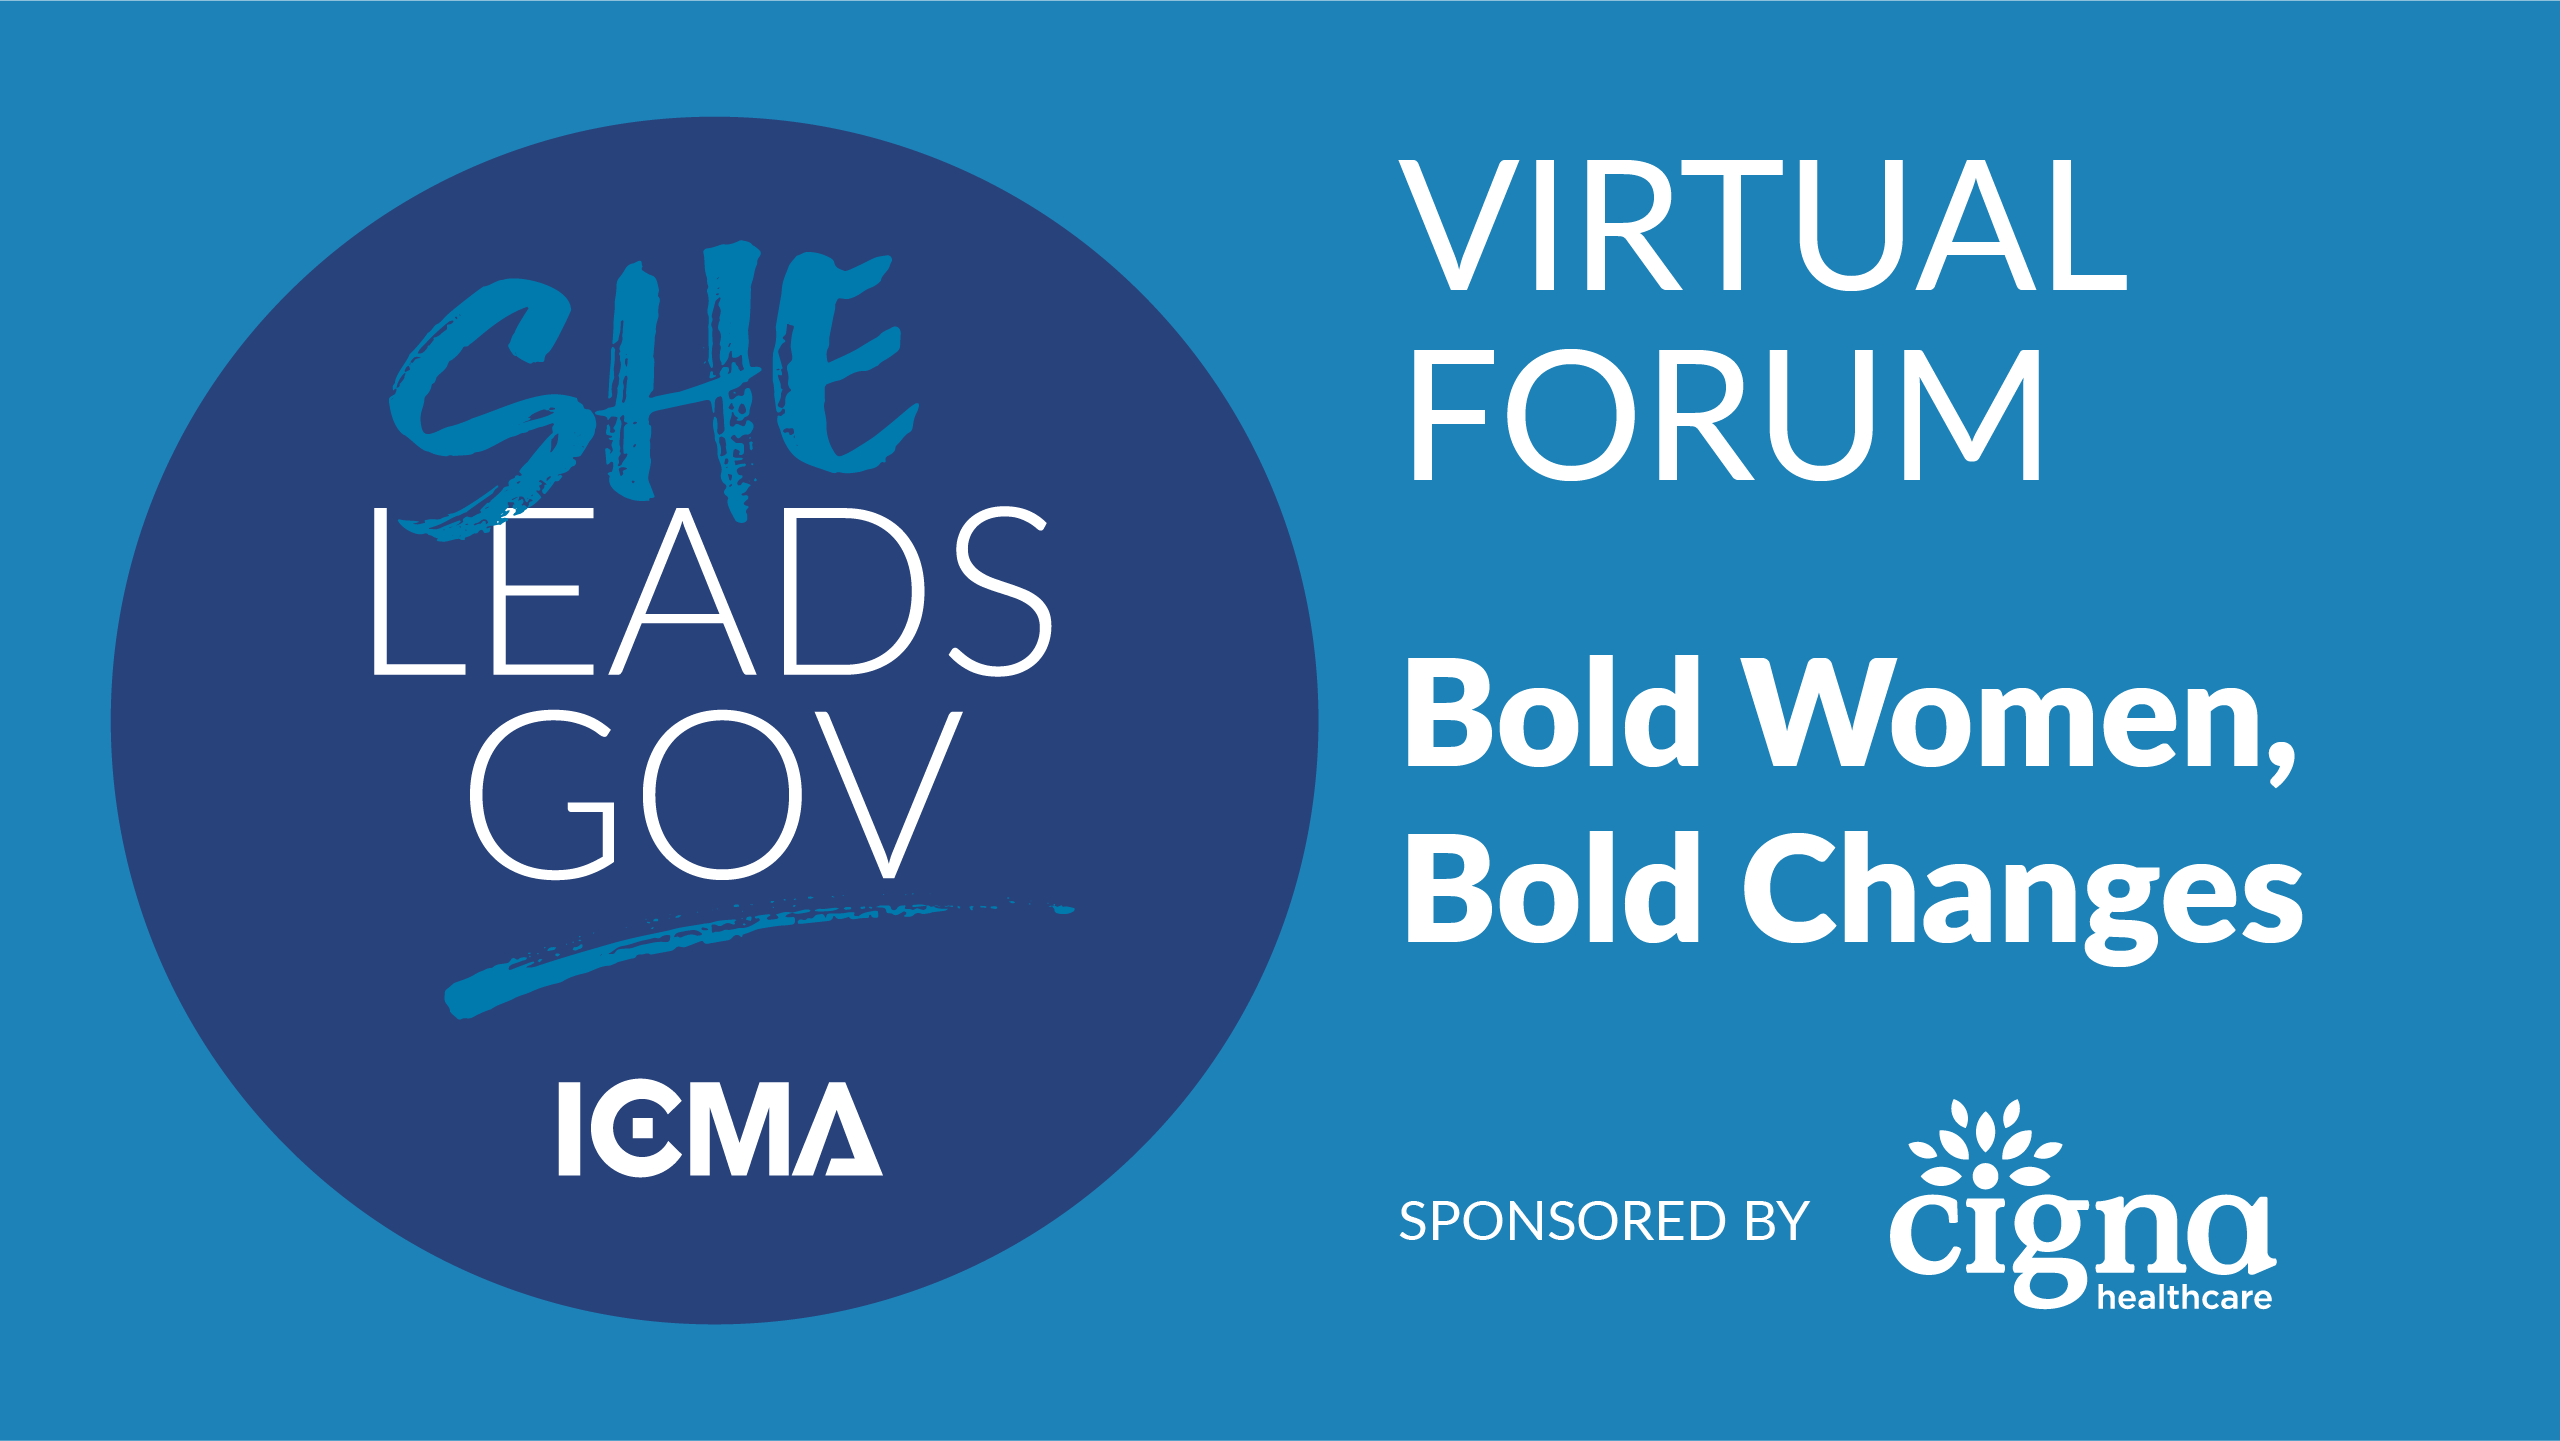 SheLeadsGov ICMA Logo with the text Virtual Forum sponsored by Cigna Healthcare